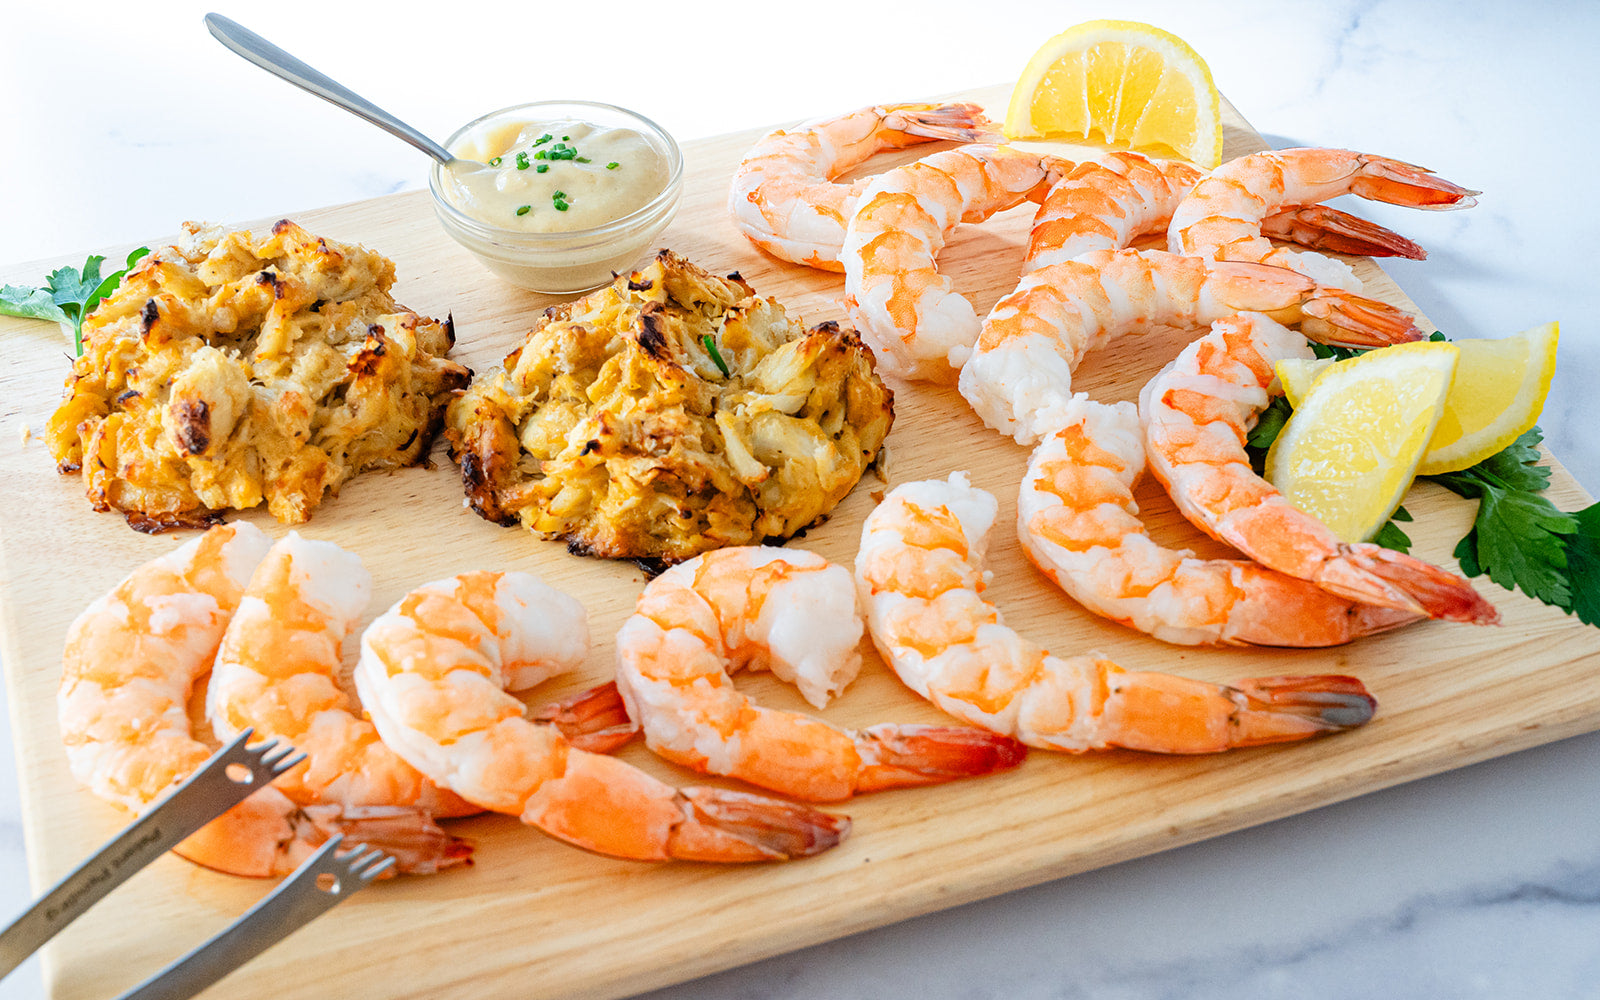 Crab cakes and shrimp cocktail appetizer sampler close-up